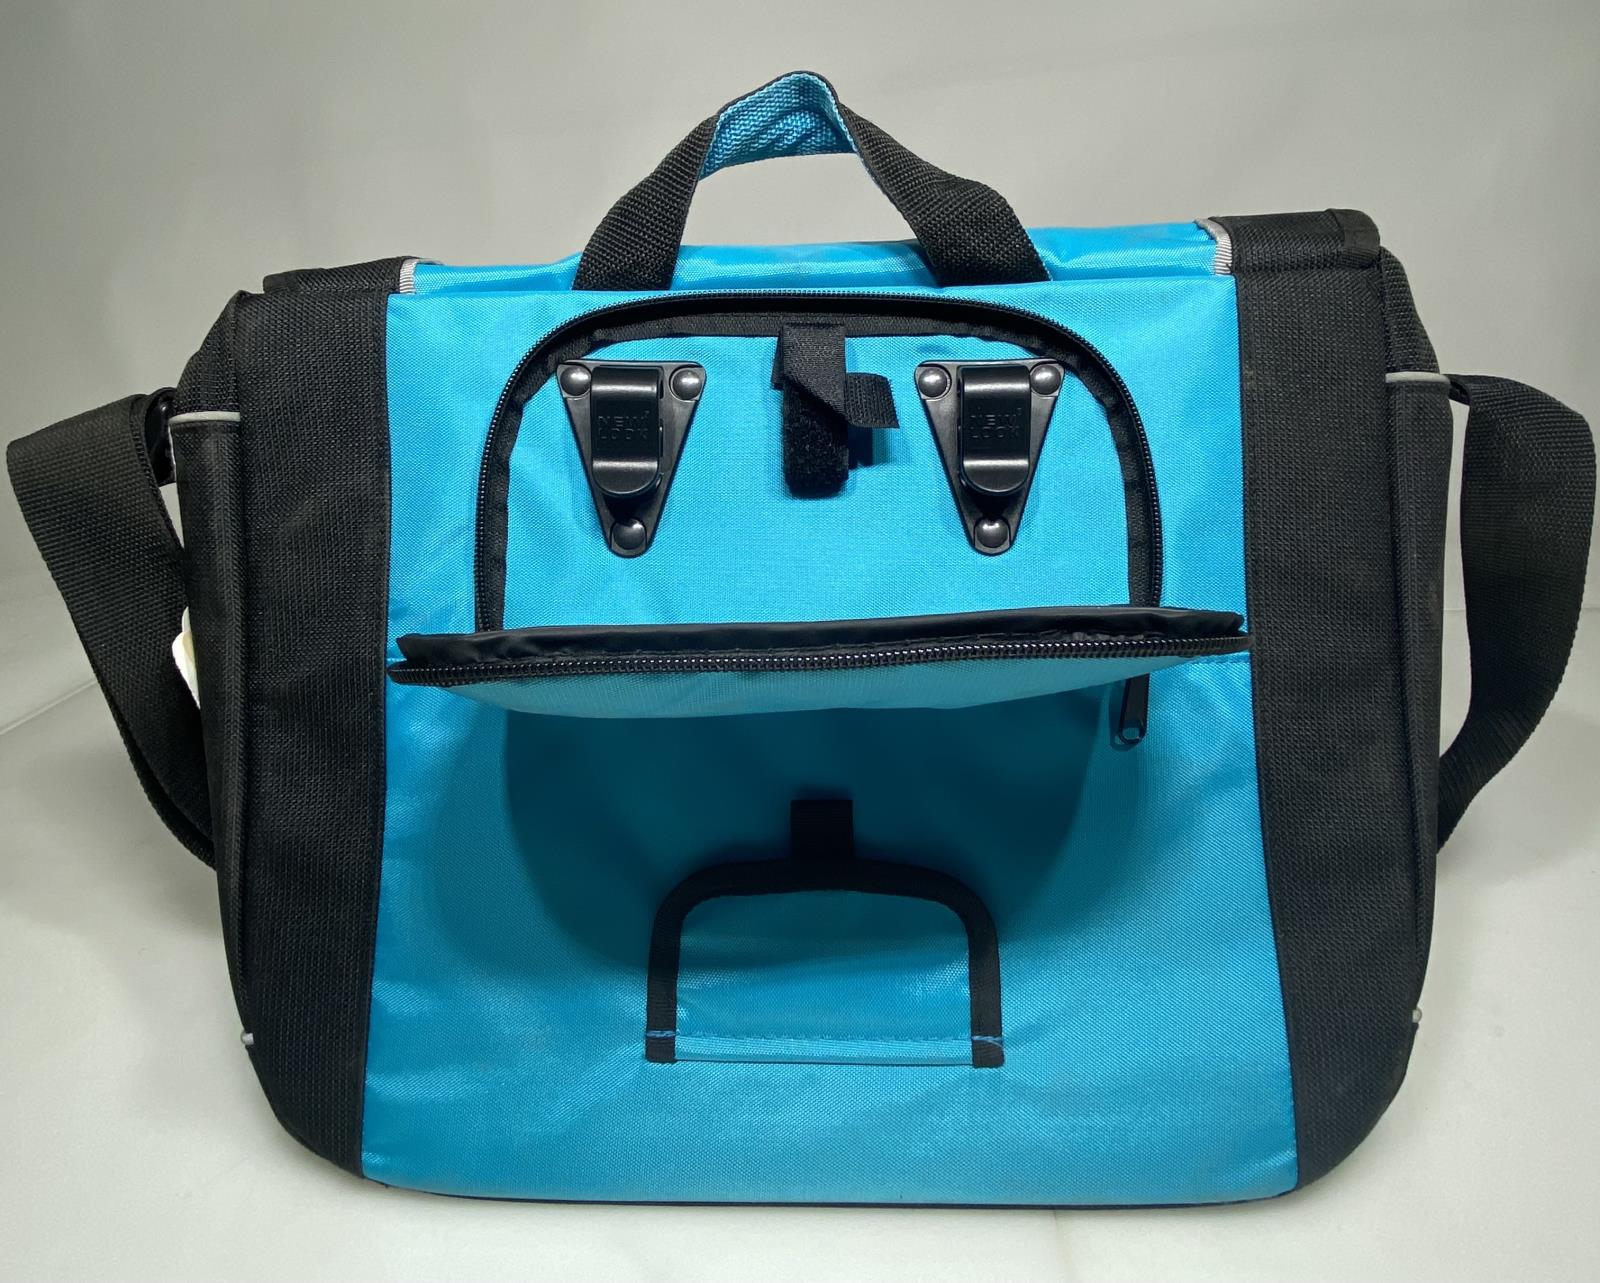 NewLook Postino Messenger Bike Pannier Bag Blue/Black New